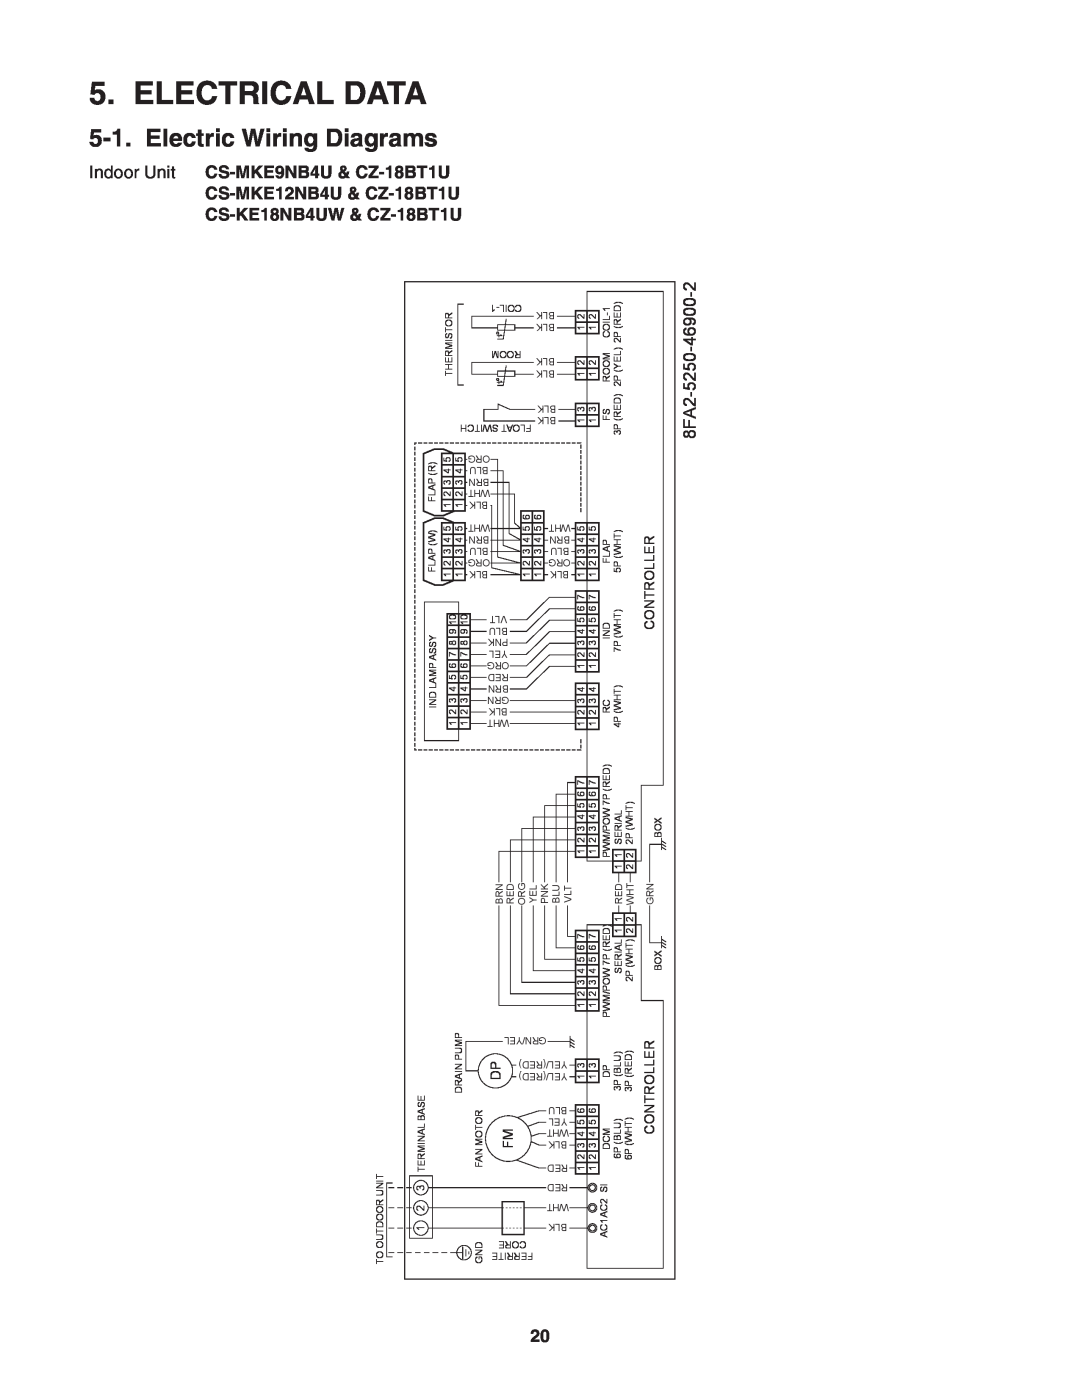 Panasonic CU-4KE31NBU Electrical Data, Electric Wiring Diagrams, Indoor Unit CS-MKE9NB4U& CZ-18BT1U, 8FA2-525046900-2 